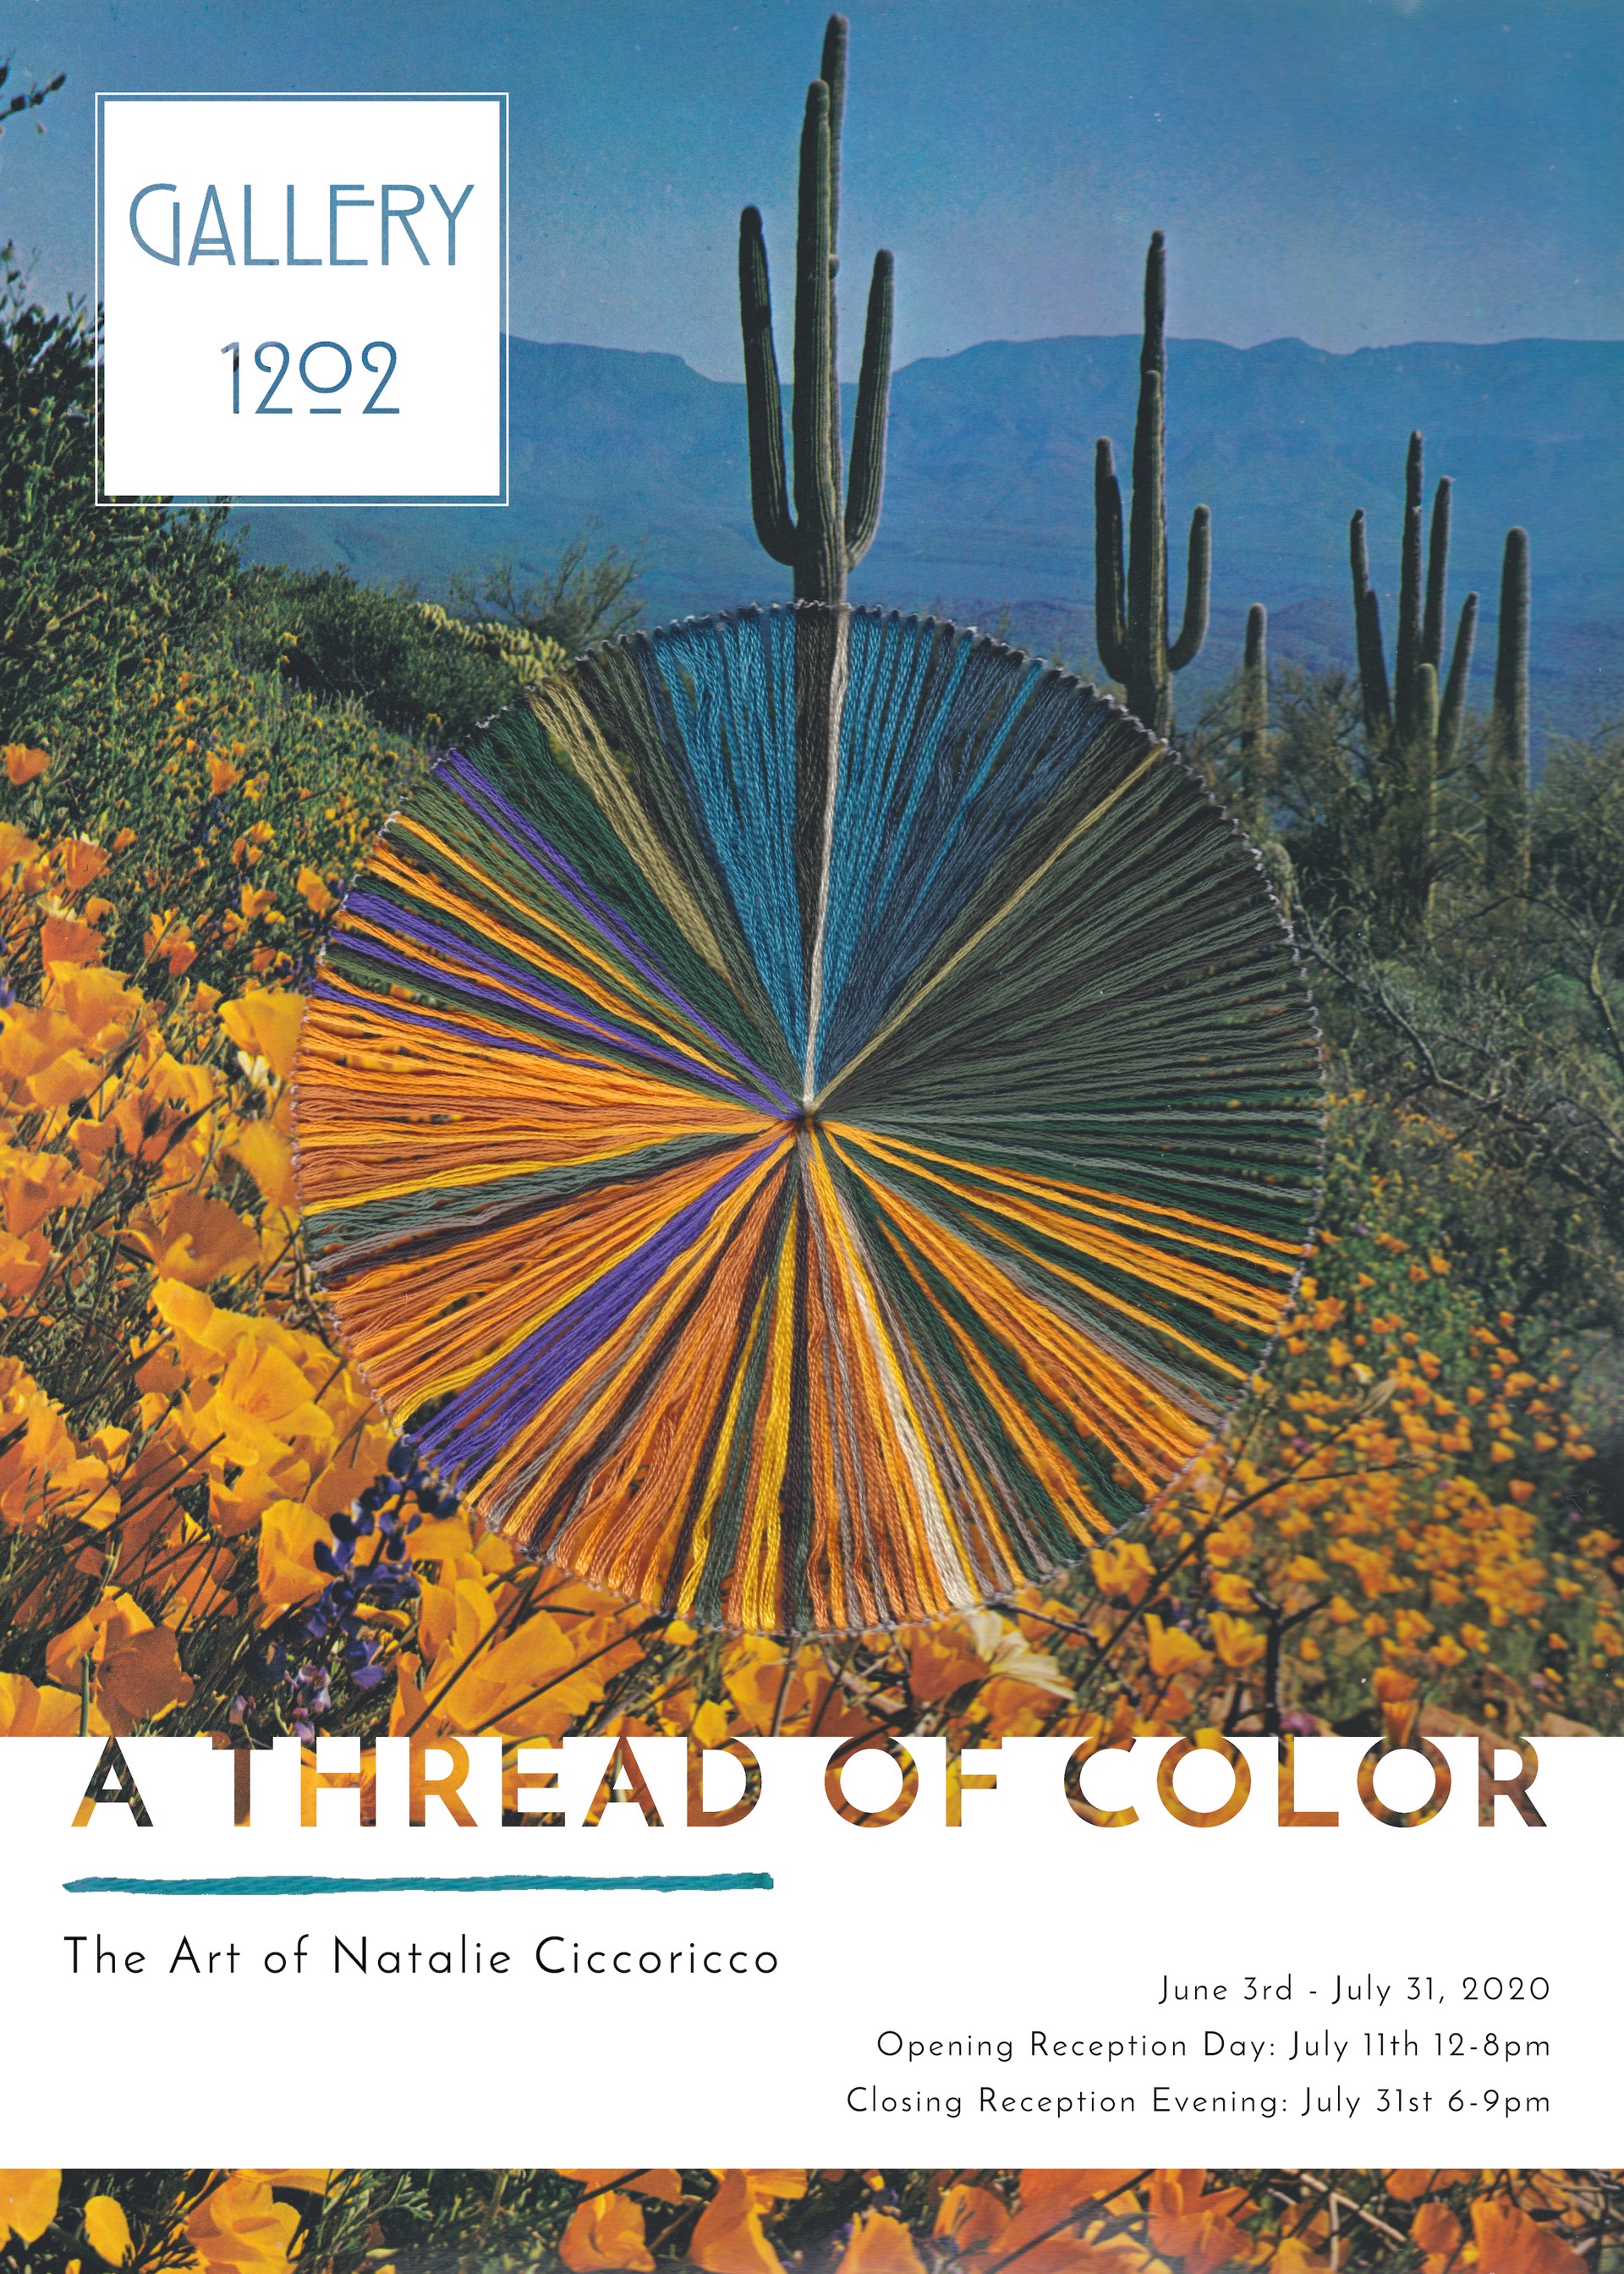 "A Thread of Color: The Art of Natalie Ciccoricco," Catalogue